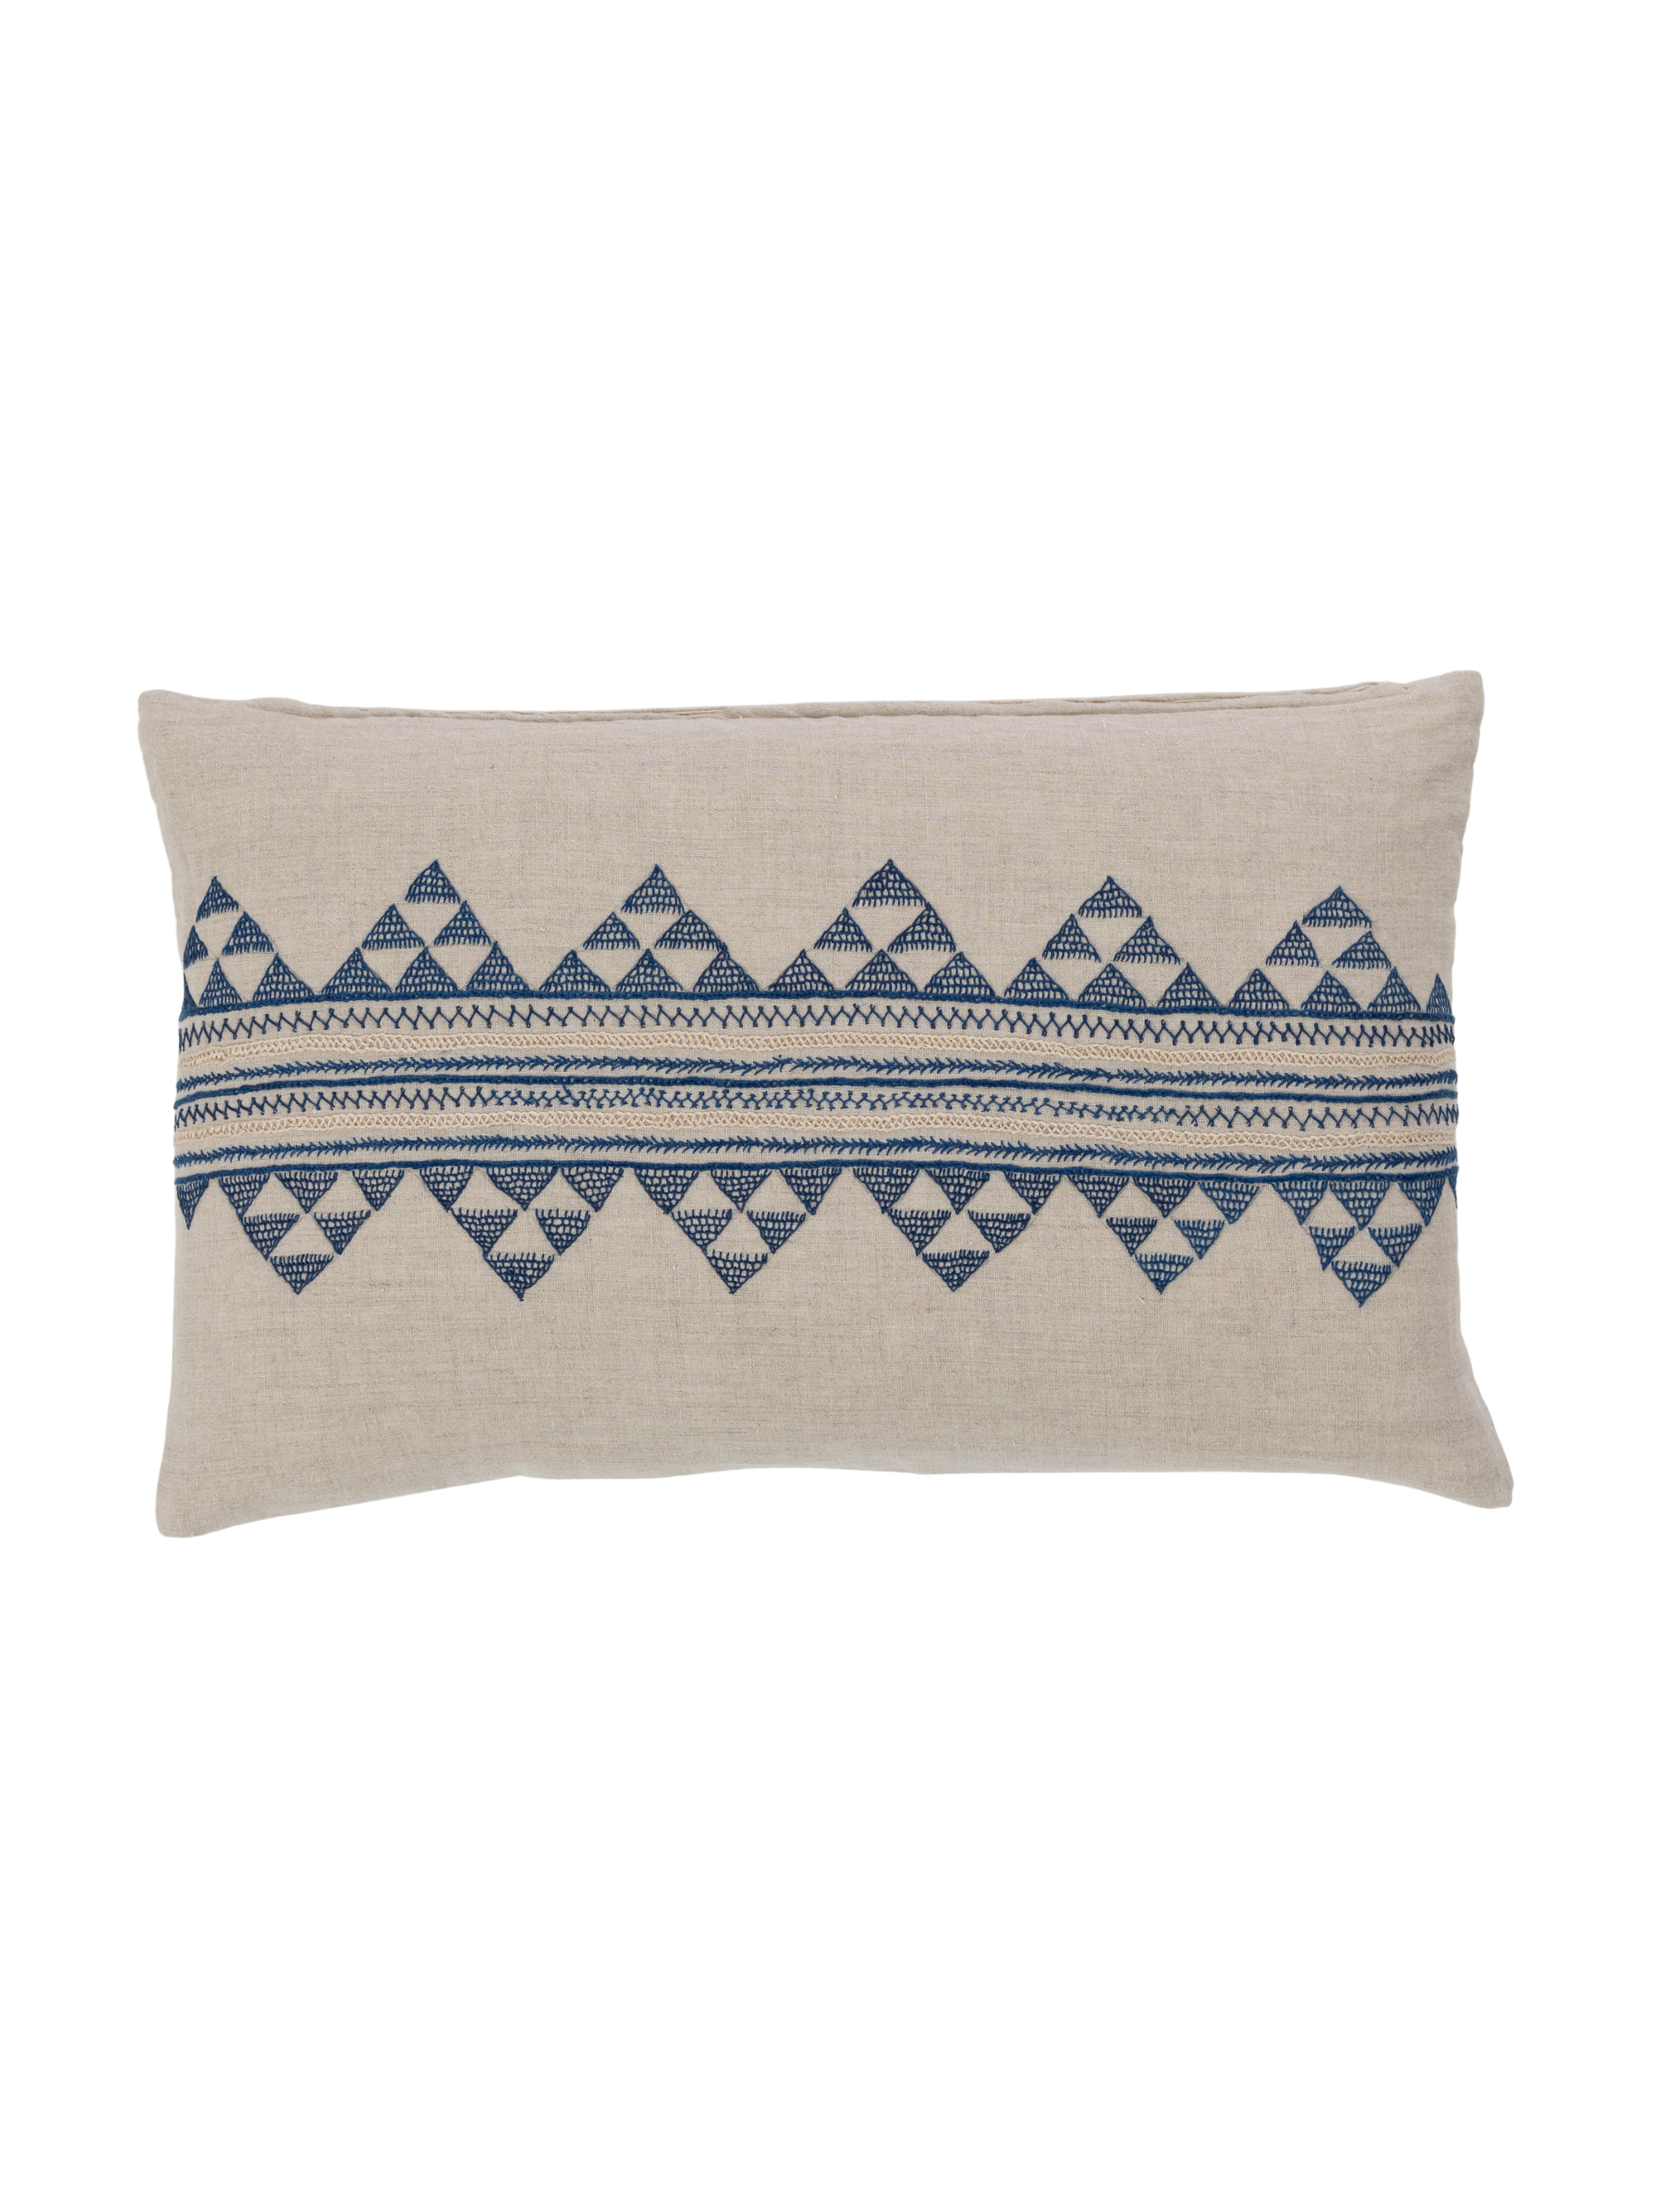 Anguri Band Indigo Decorative Pillow Cover